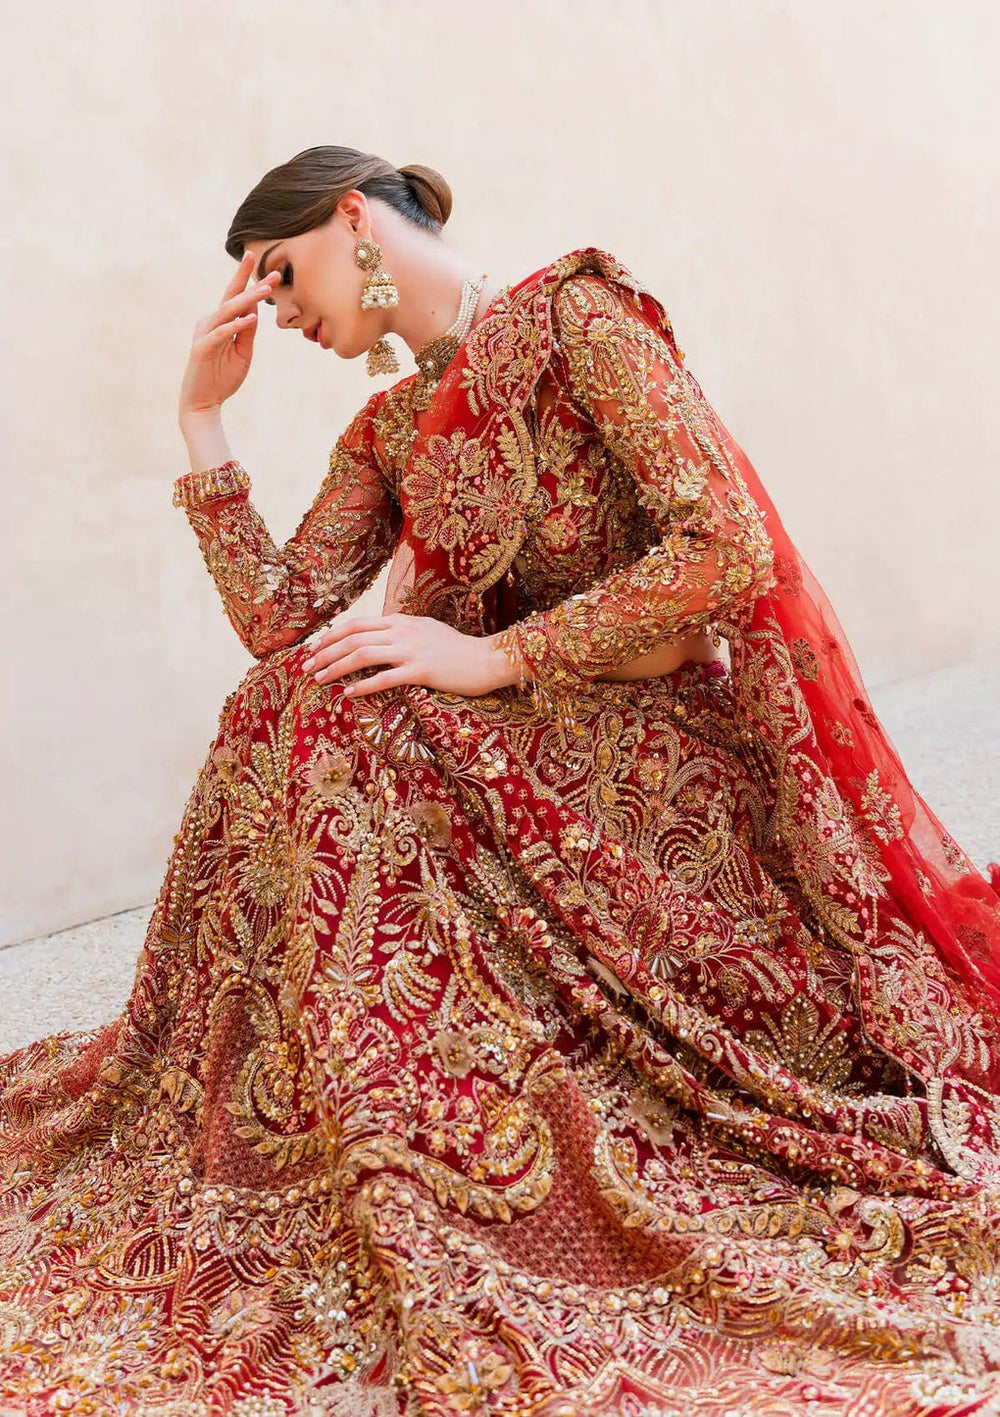 Buy Now Evara Wedding 2023 by Elaf Premium | EEB-04 MARHABA Online in USA, UK, Canada & Worldwide at Empress Clothing.